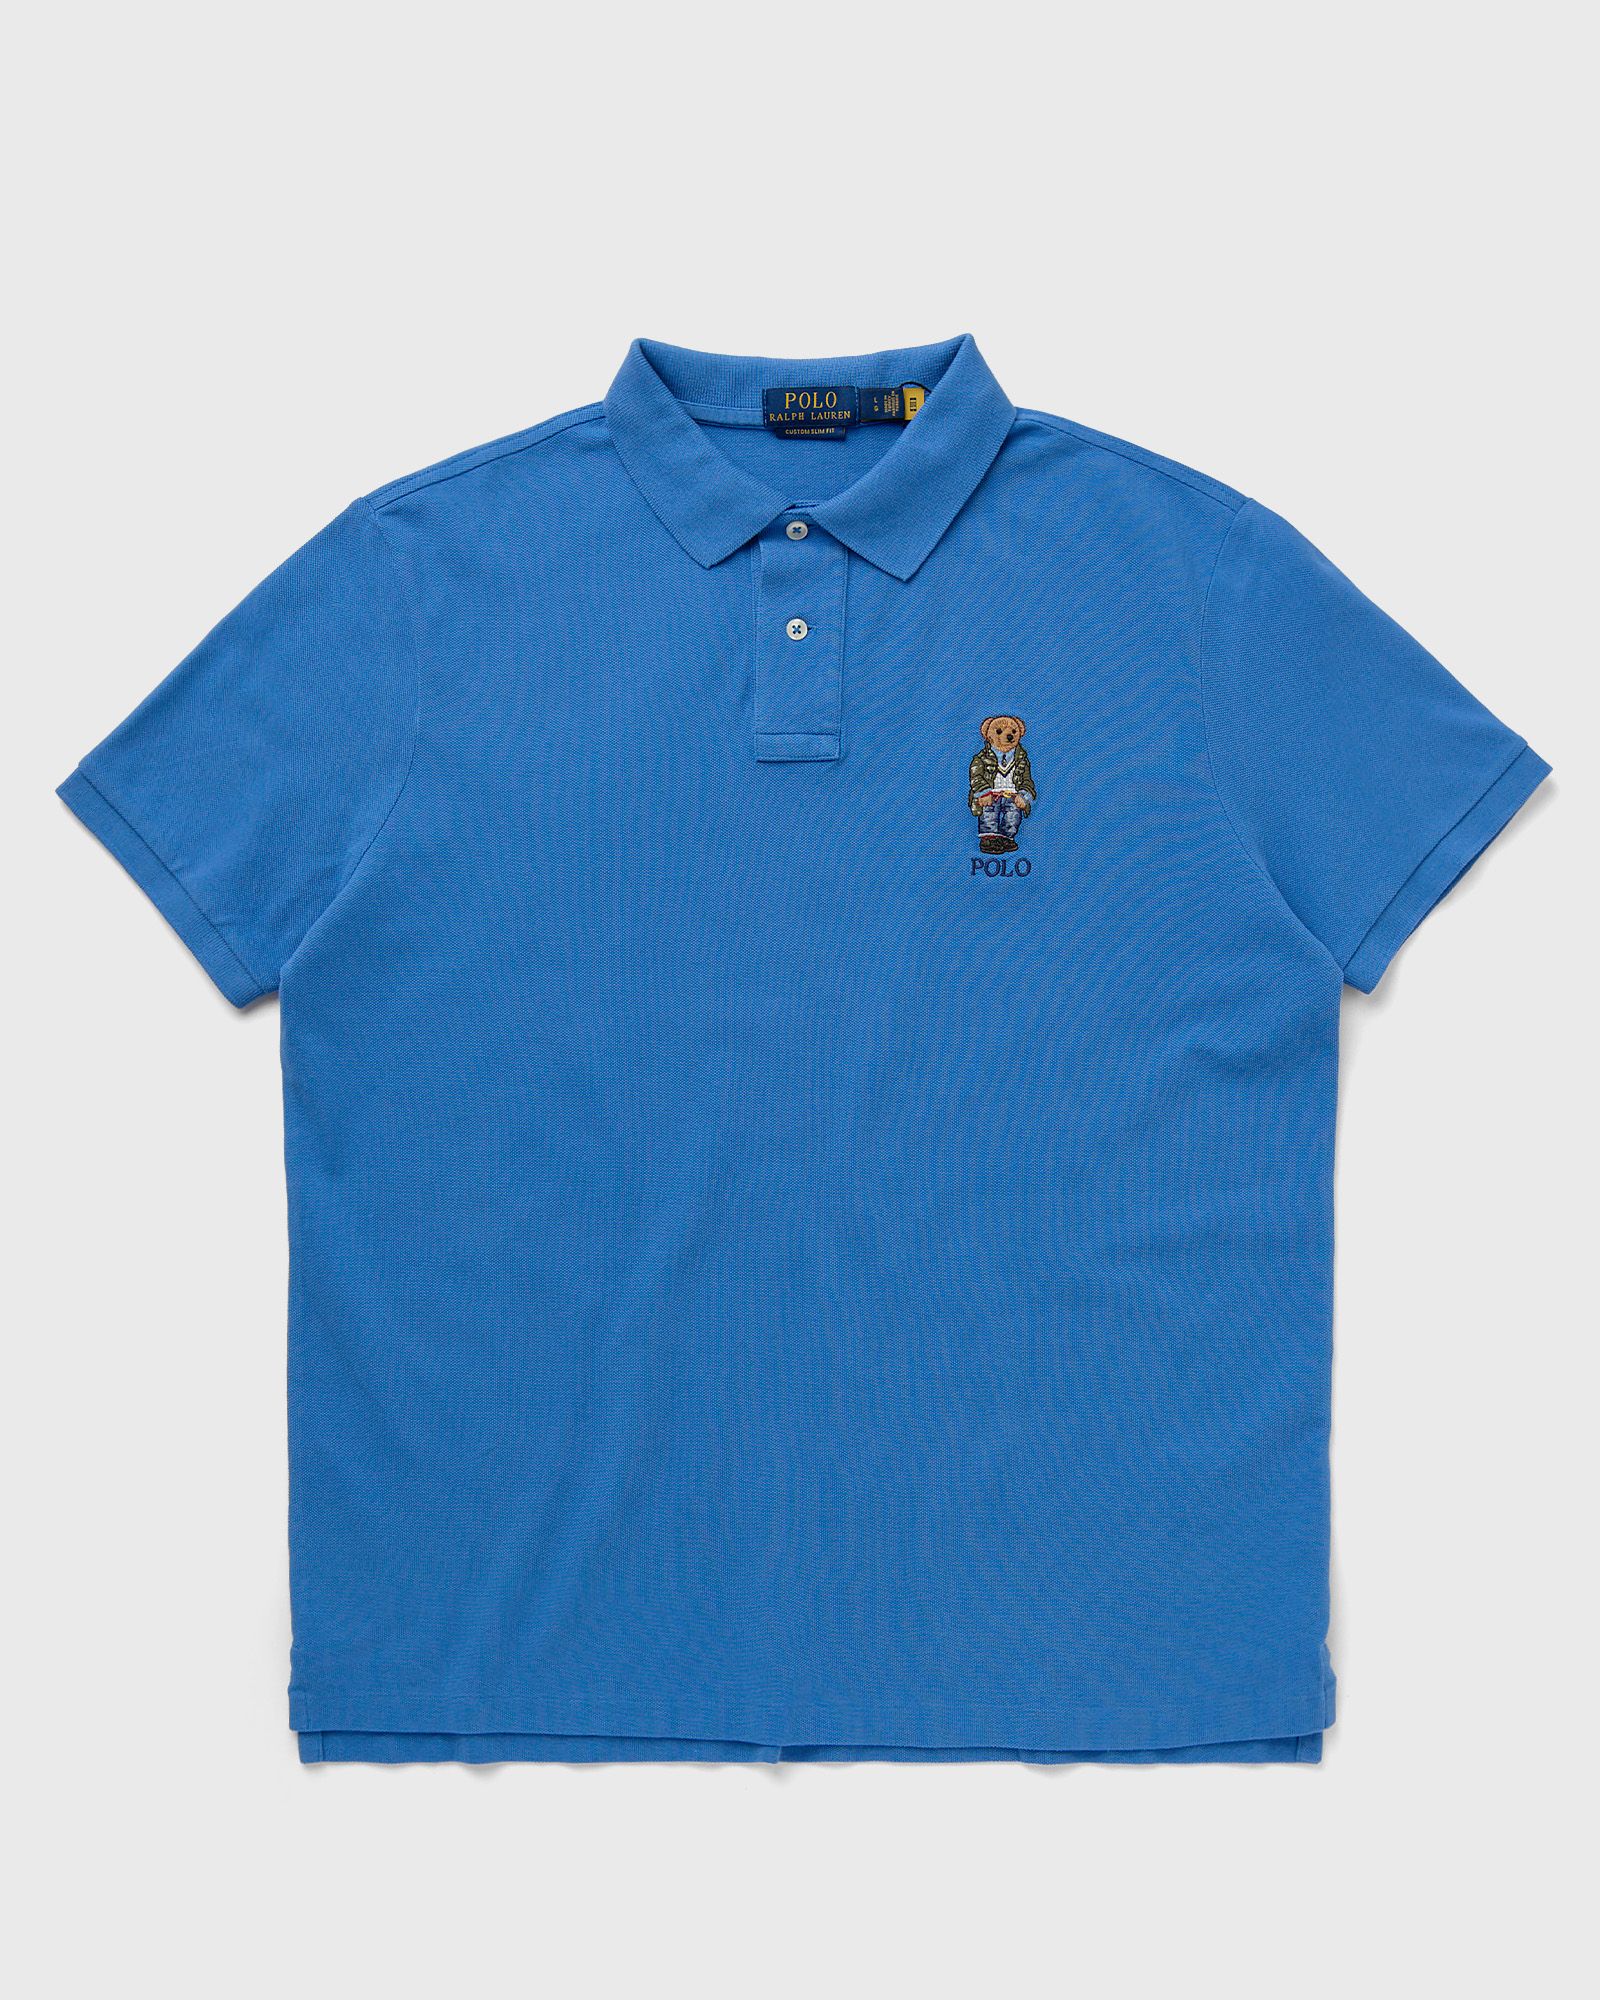 Polo Ralph Lauren - short sleeve-polo shirt men polos blue in größe:xxl